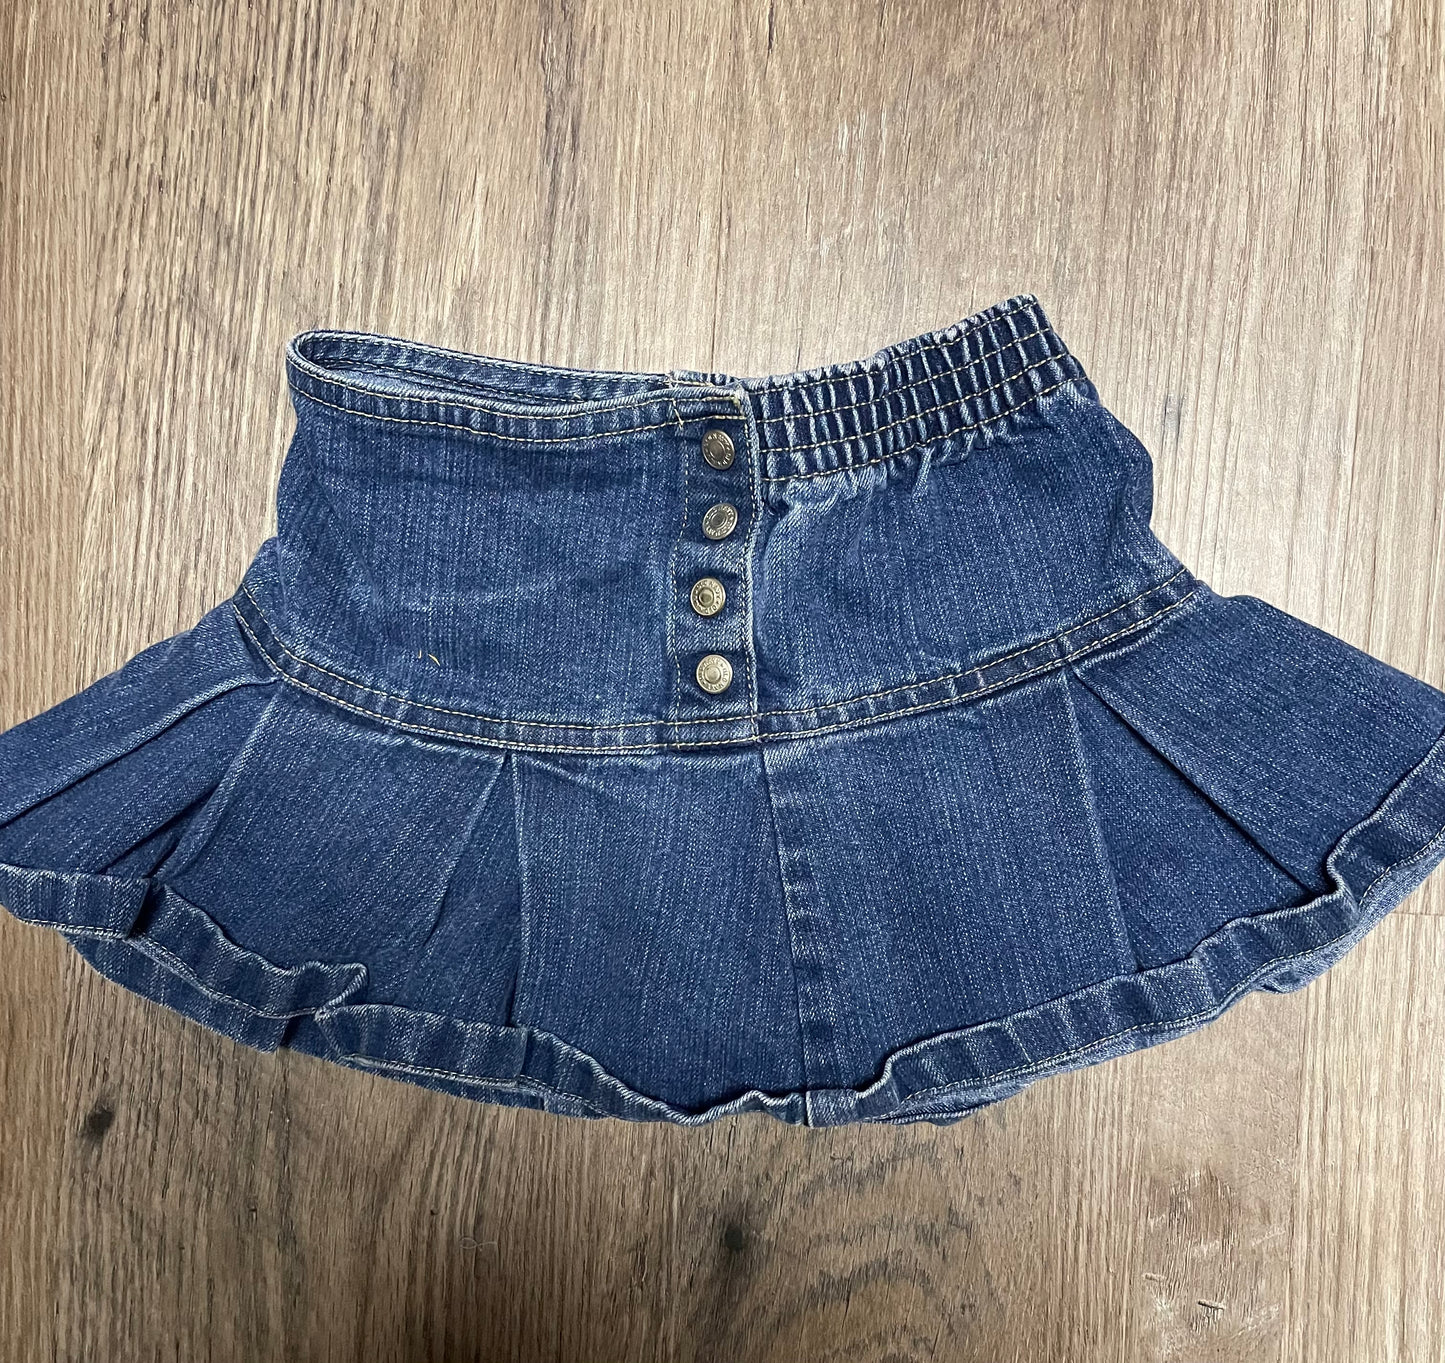 Girl 18-24 months old navy jean skirt